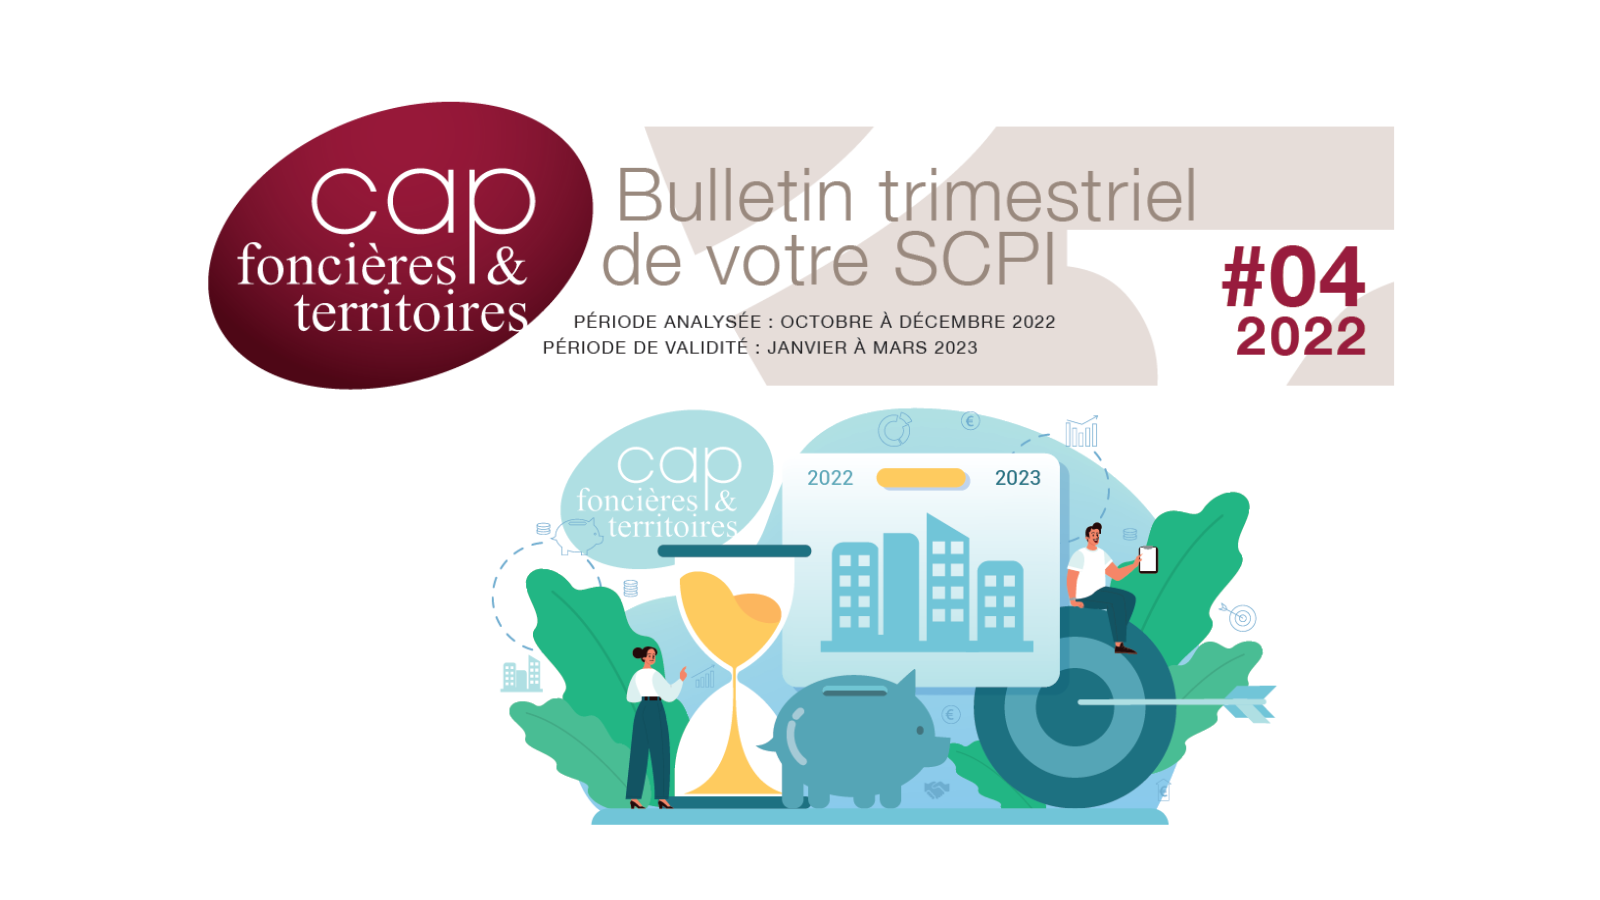 Le Bulletin Trimestriel 4 2022 - CAP Foncières & Territoires est disponible !